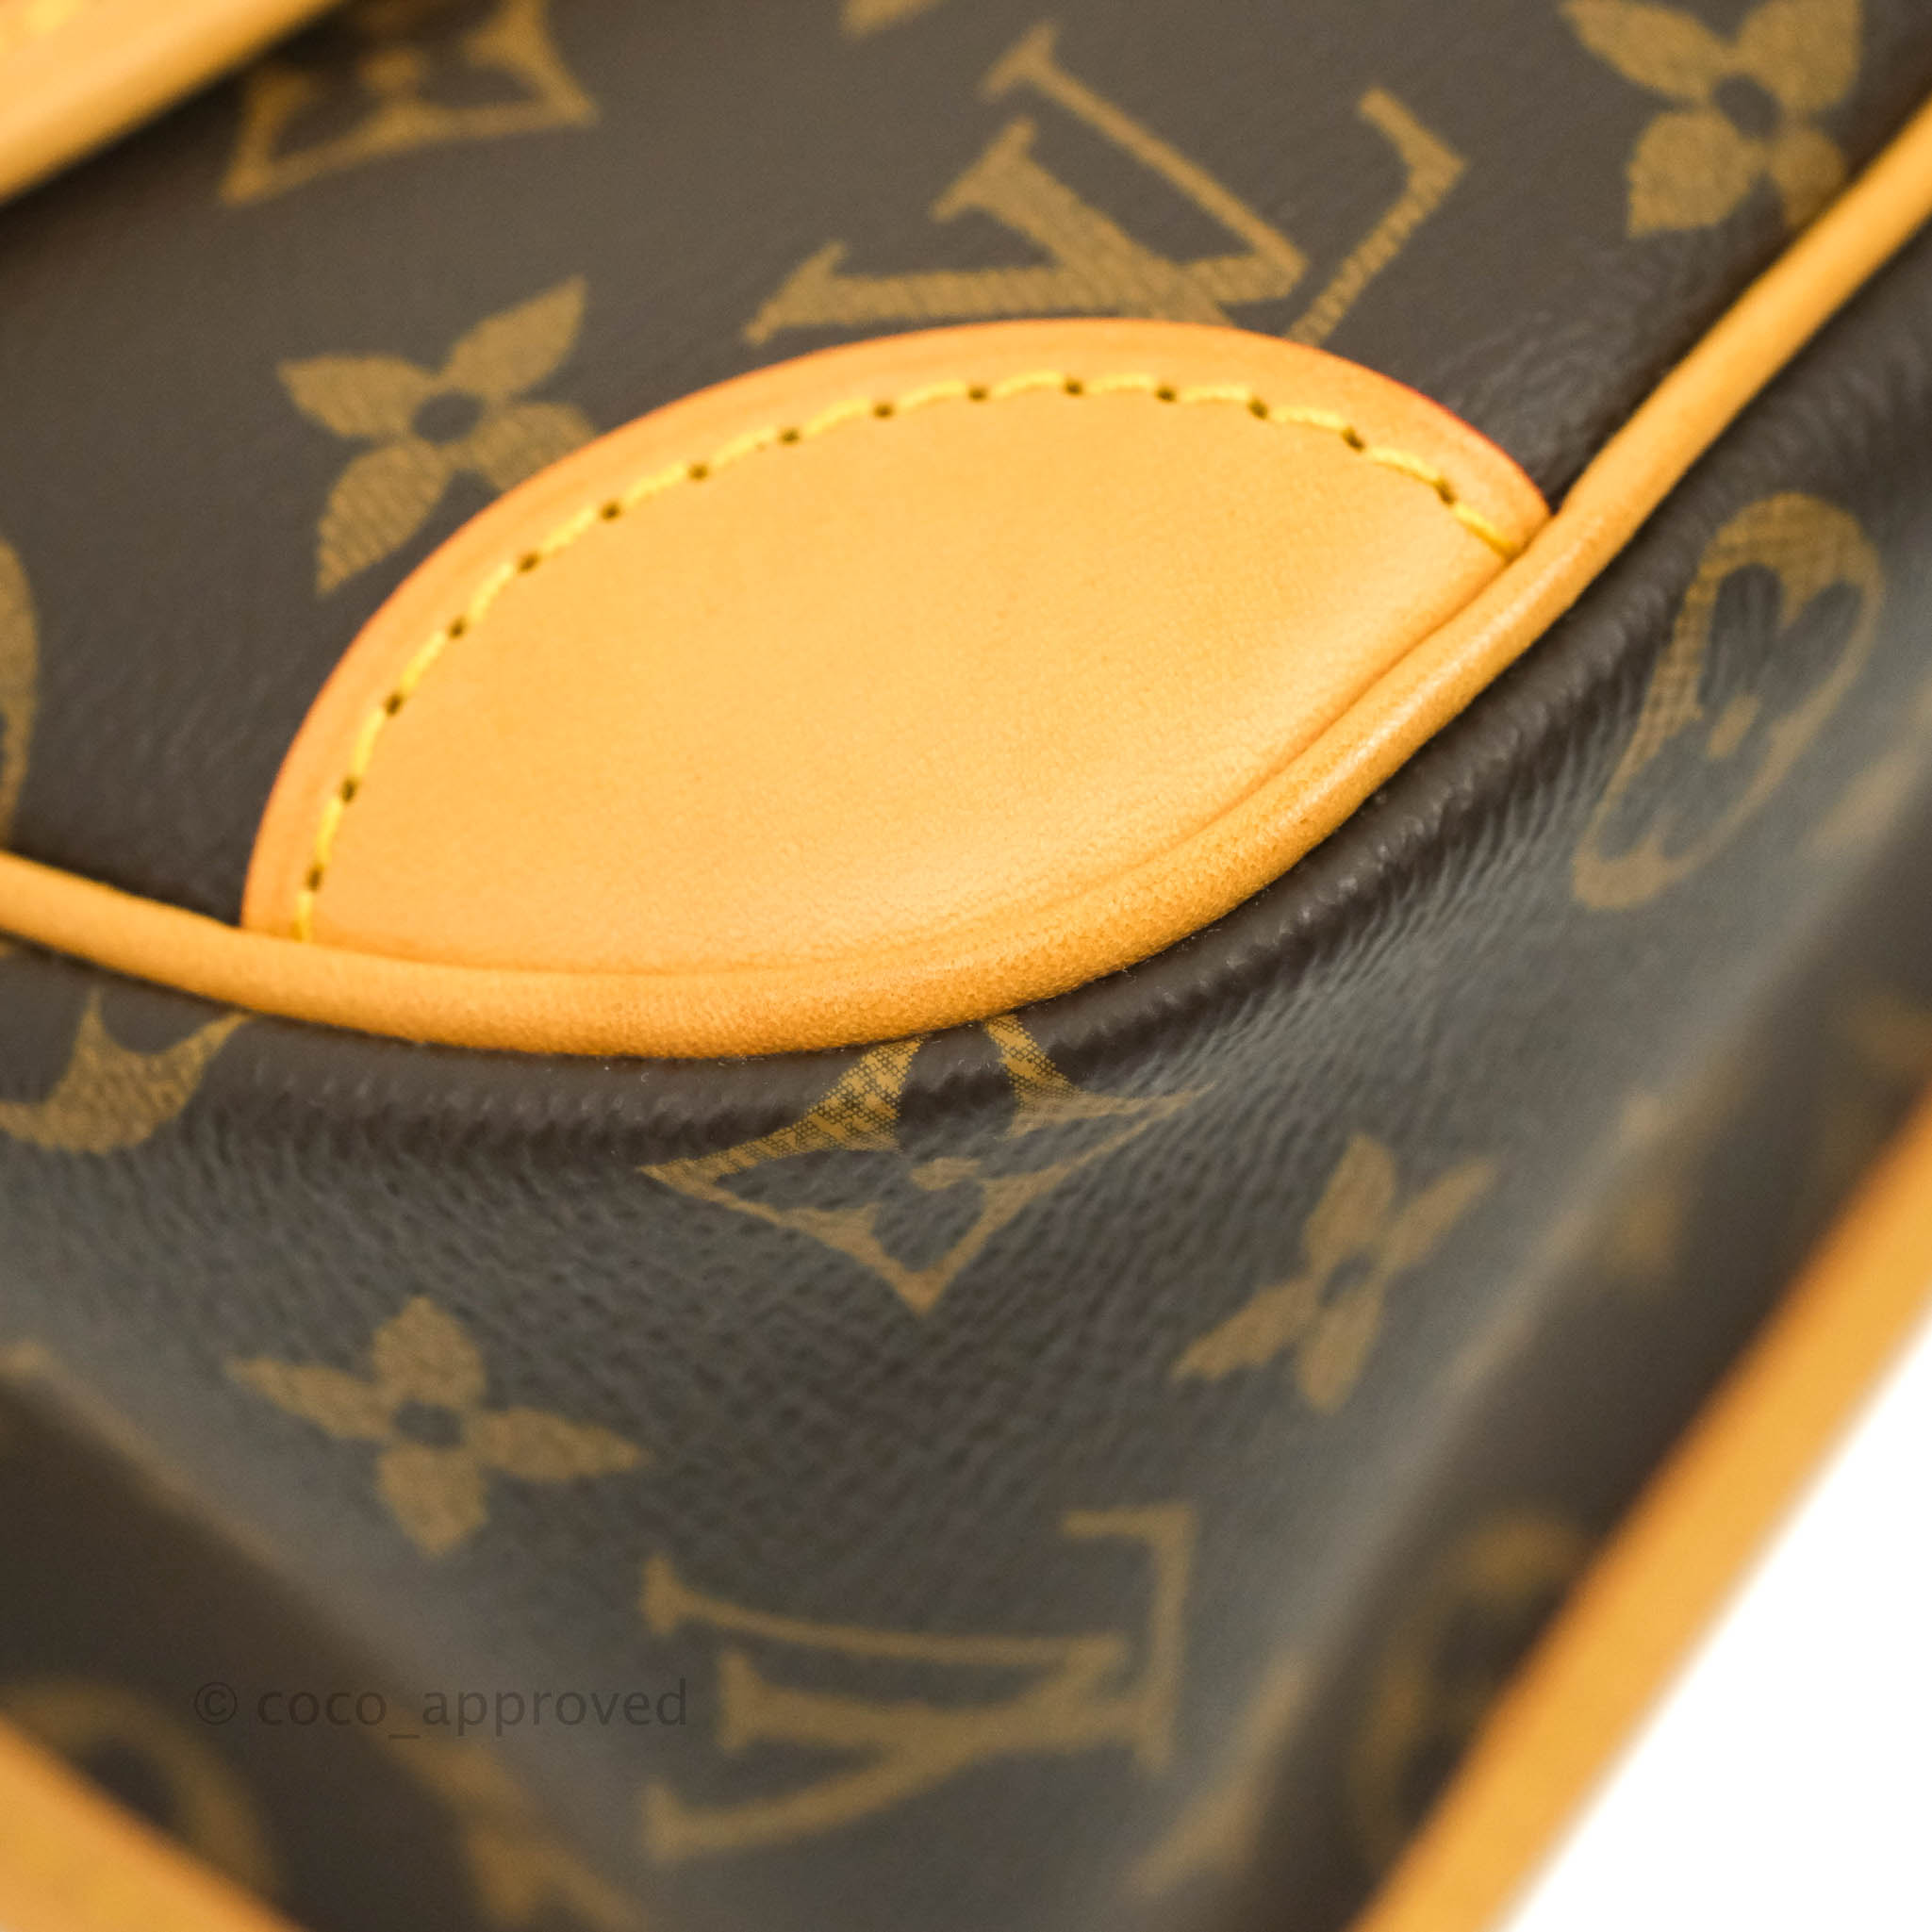 Louis Vuitton Diane Satchel Bag In Brown/Fuchsia - Praise To Heaven